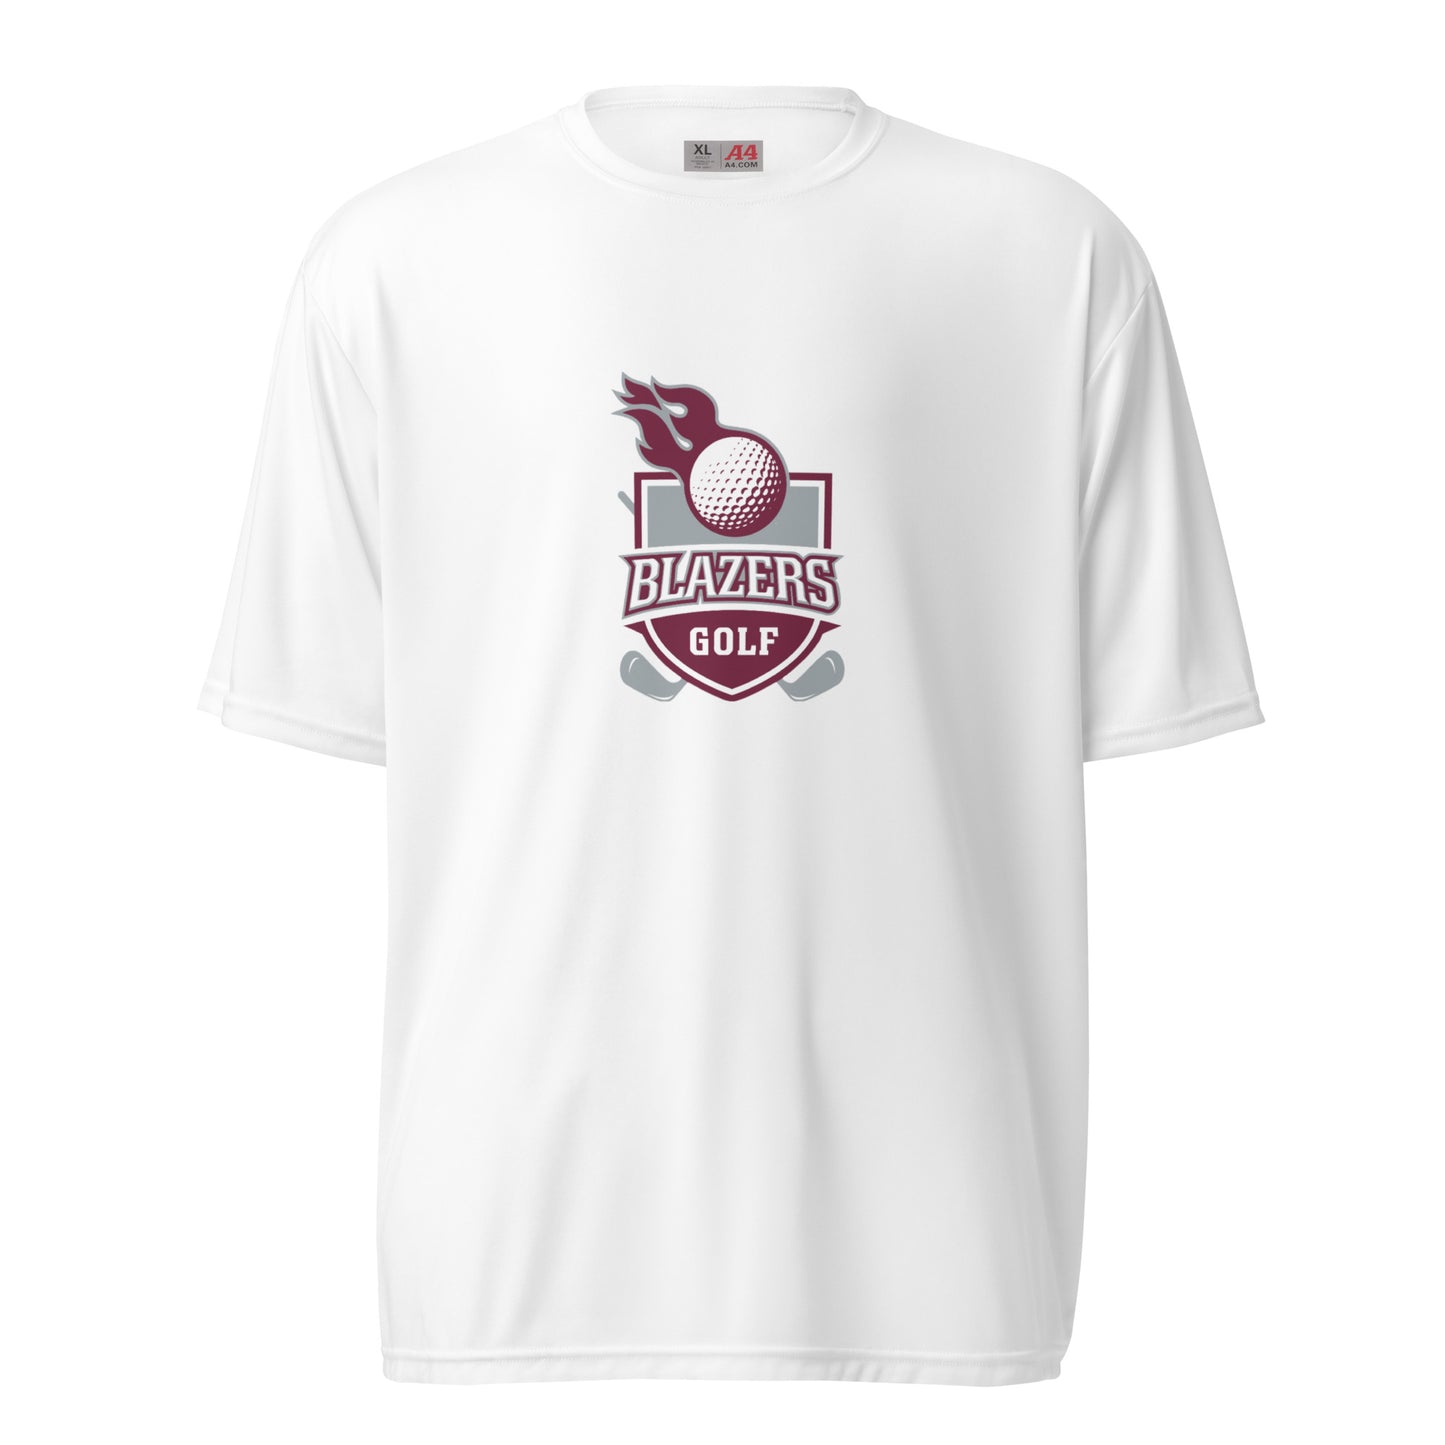 Blazers Golf Unisex Performance Short-Sleeve T-Shirt